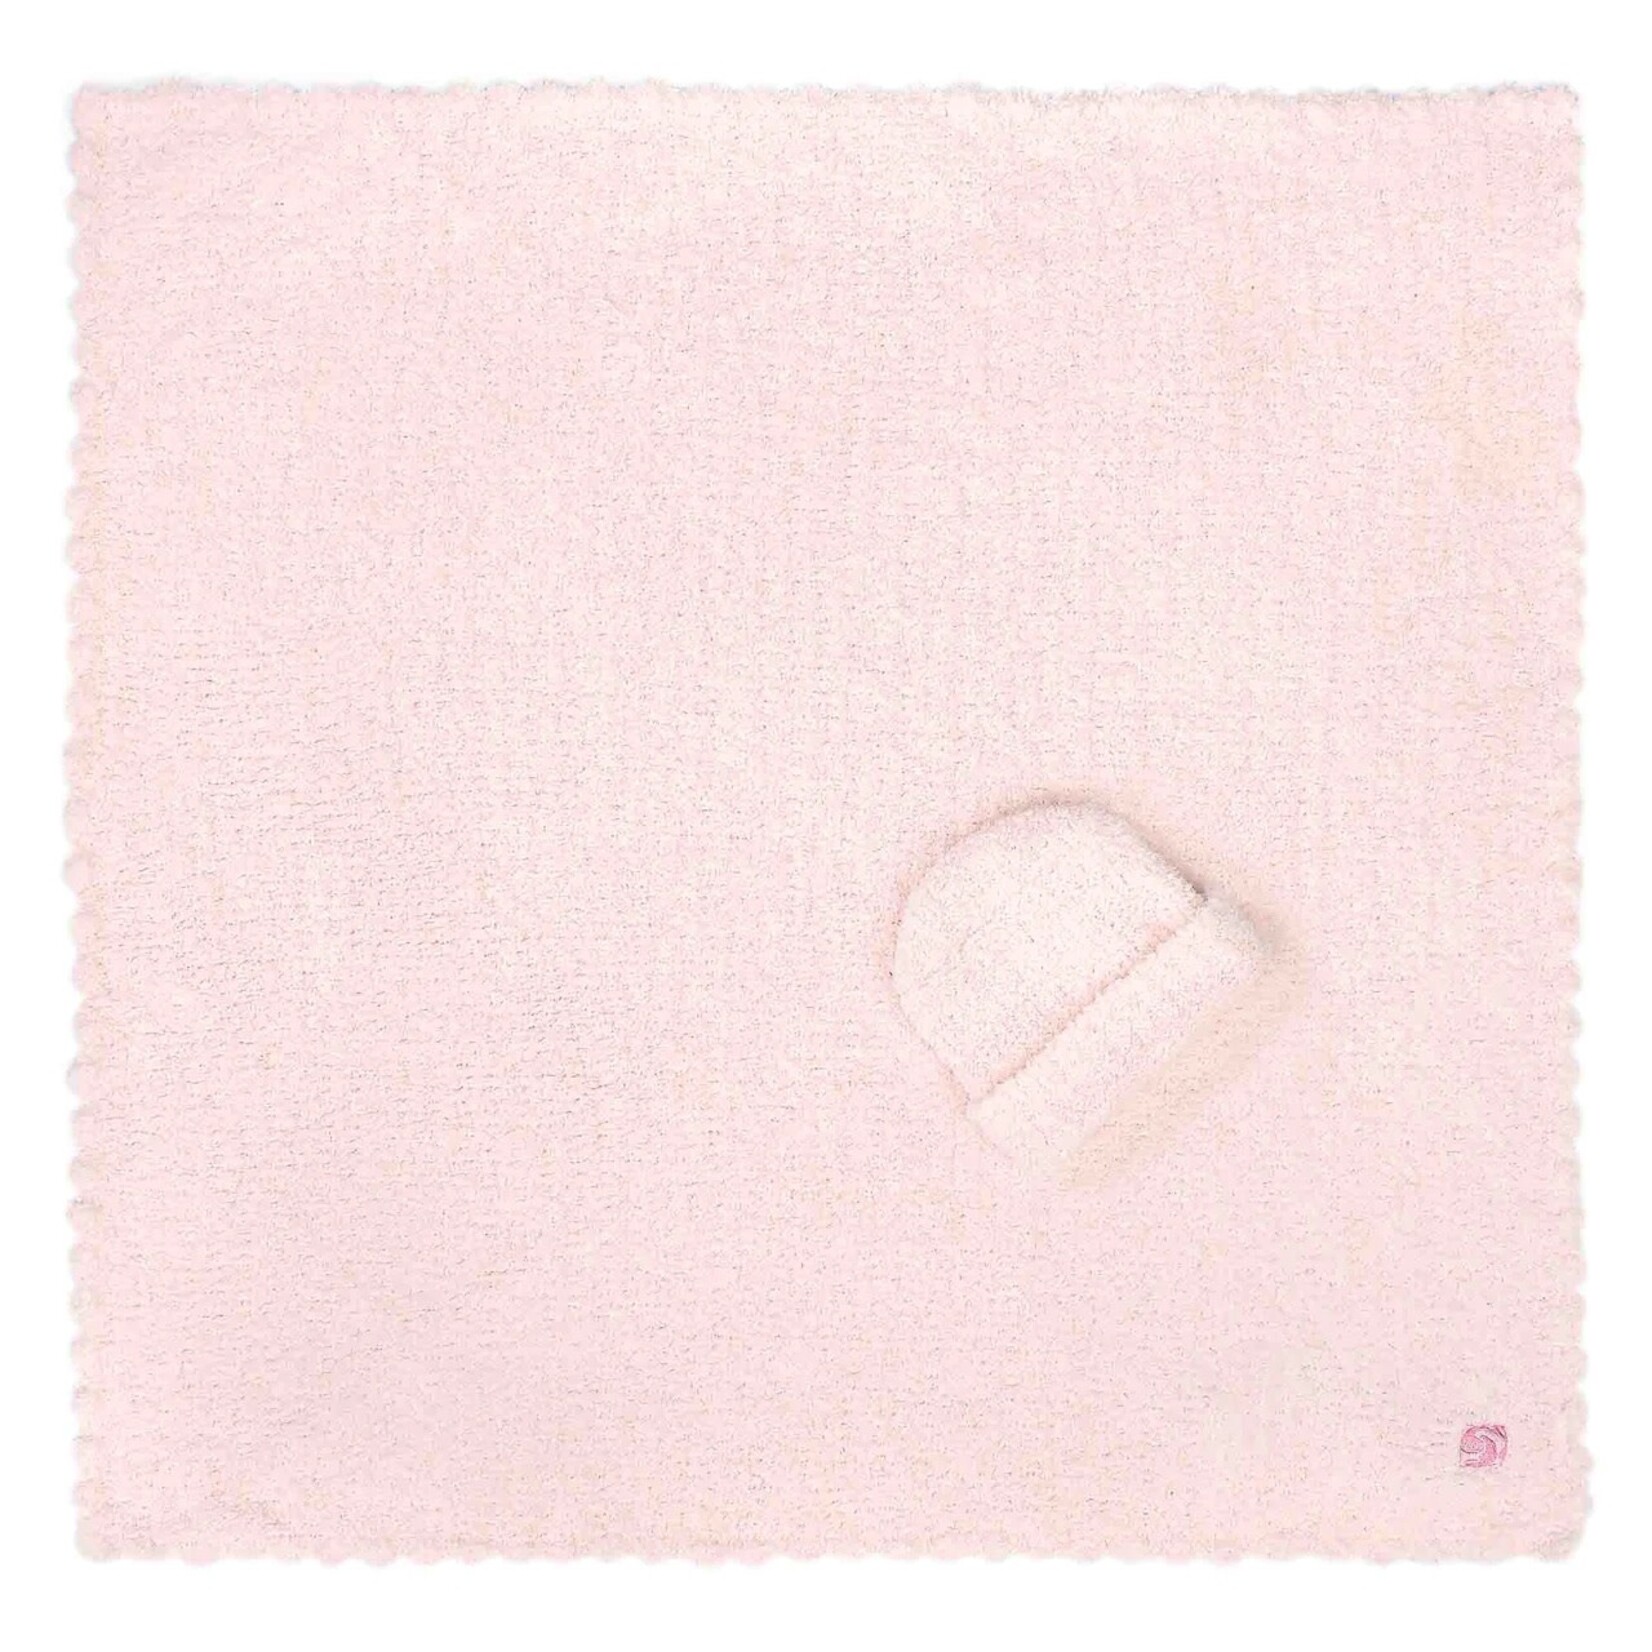 Kashwere Baby Blanket - Solid w/ Cap - Pink - 30x30